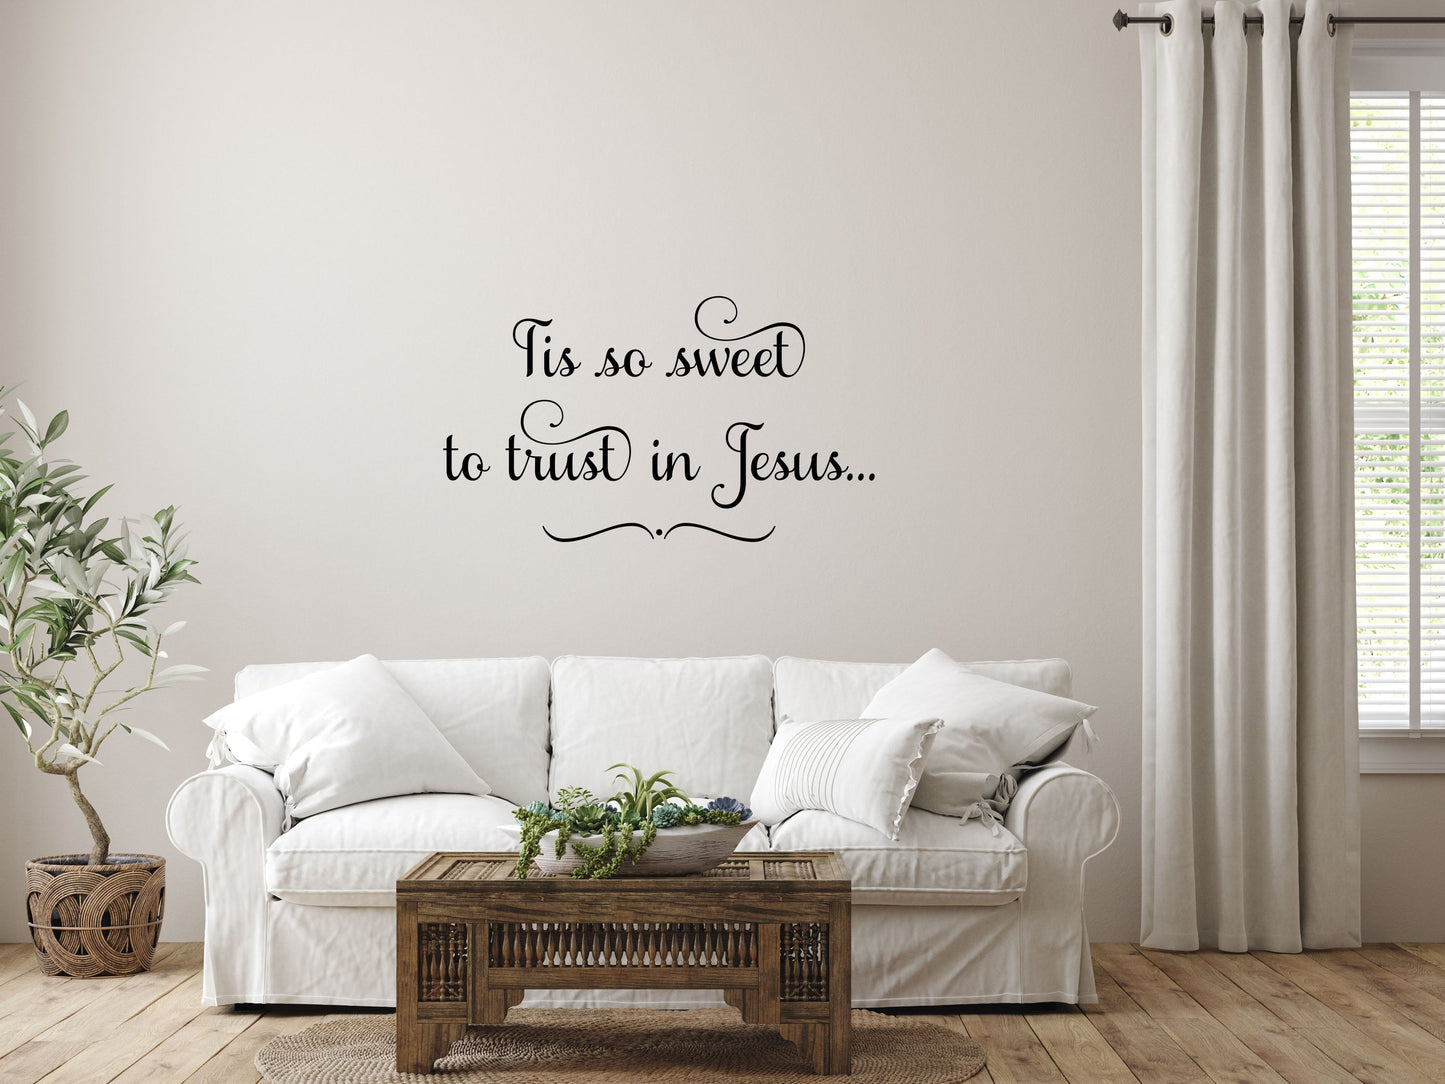 Tis So Sweet To Trust In Jesus - Inspirational Wall Signs Vinyl Wall Decal Inspirational Wall Signs 